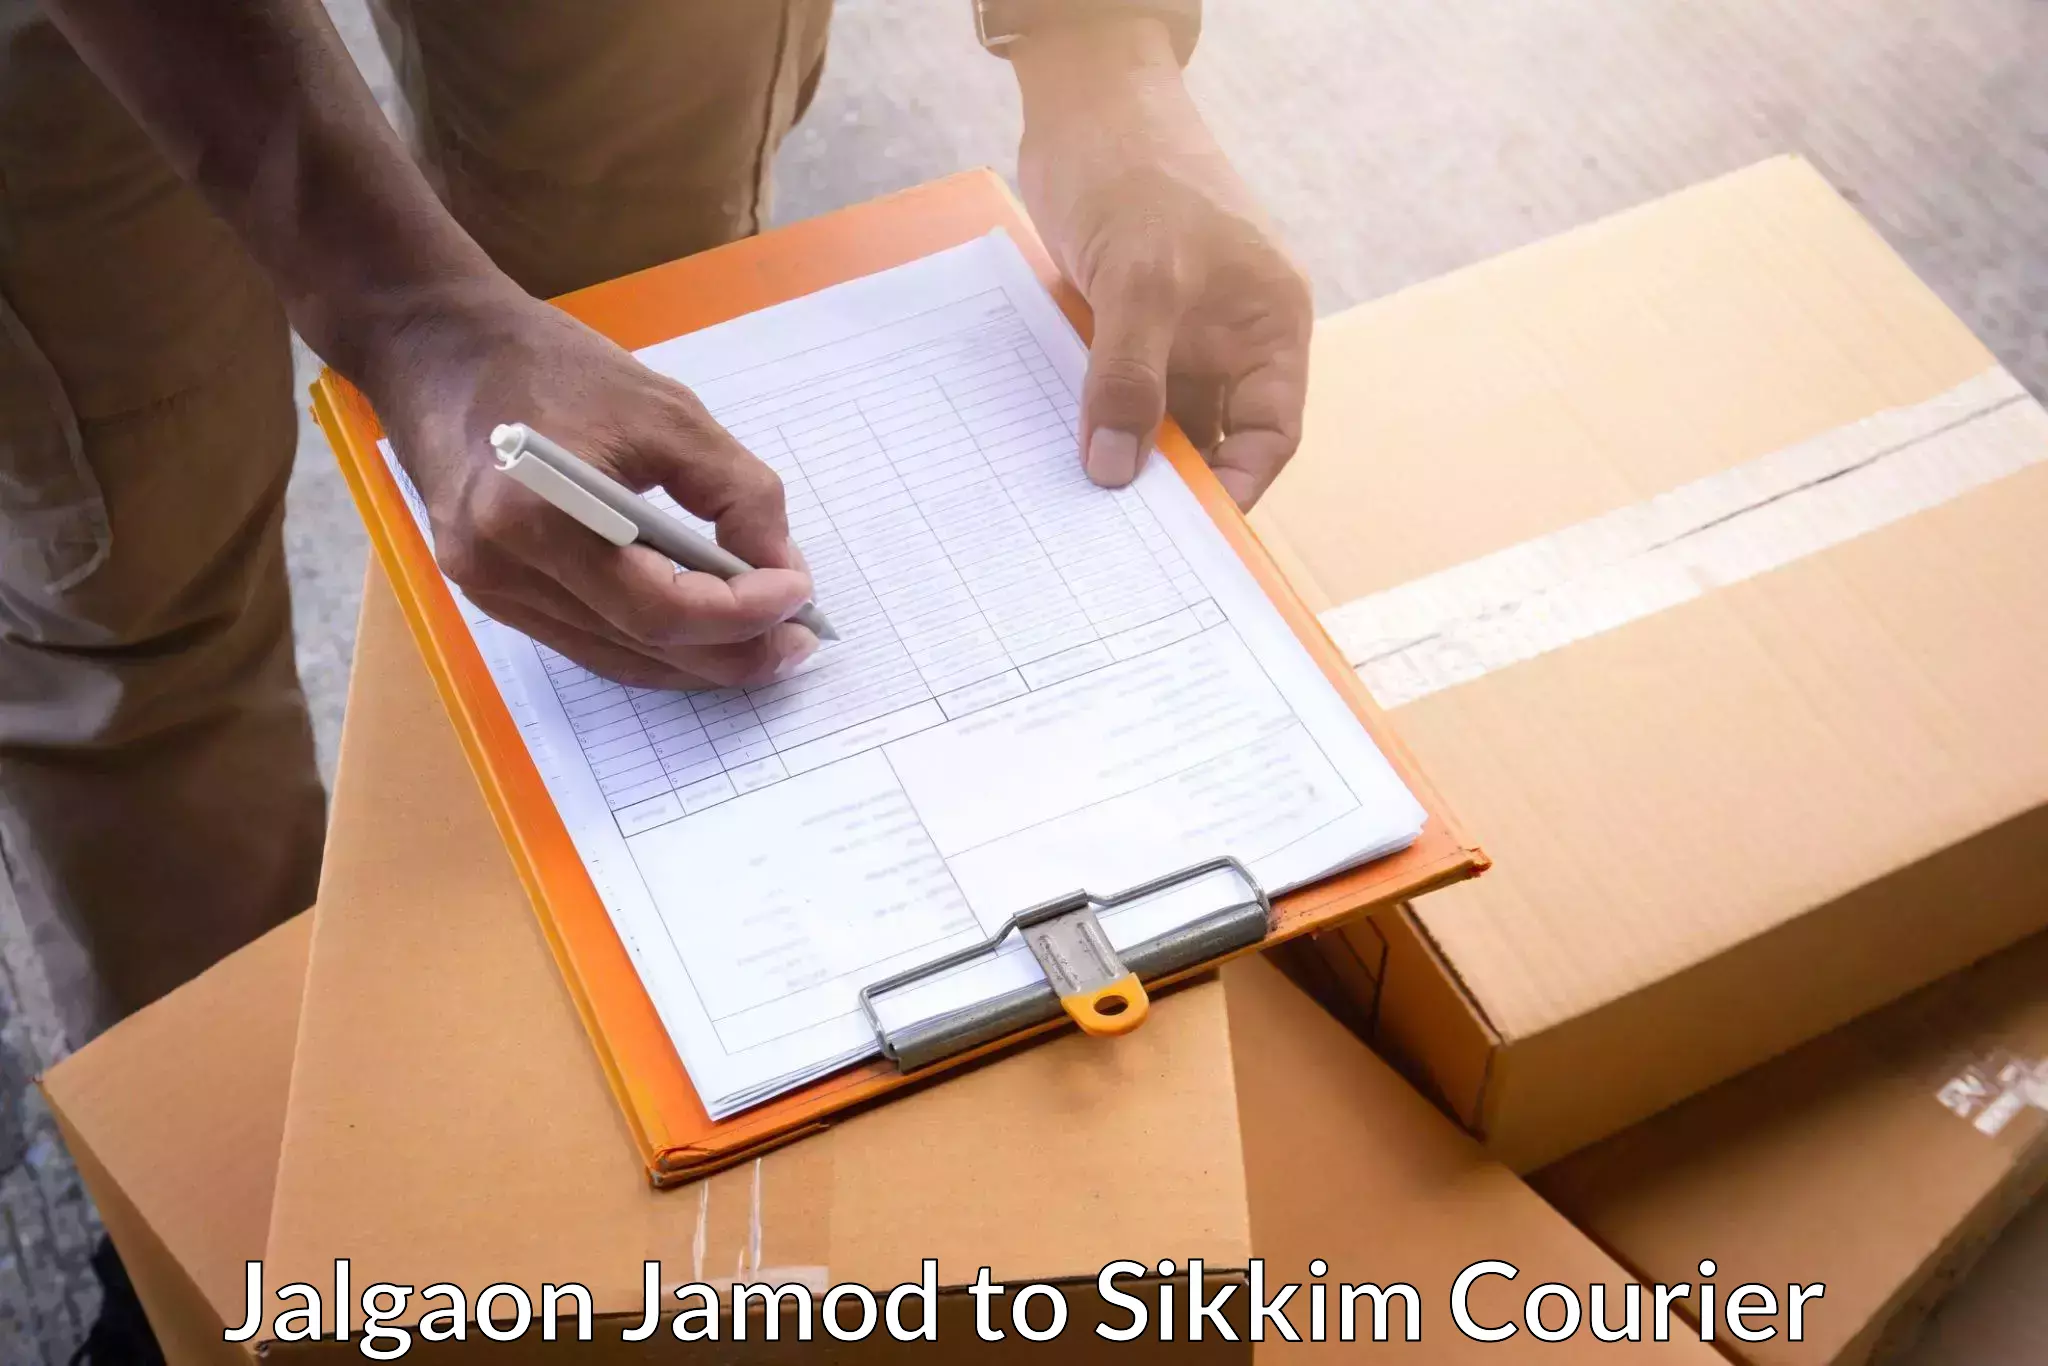 Personalized courier experiences Jalgaon Jamod to Jorethang